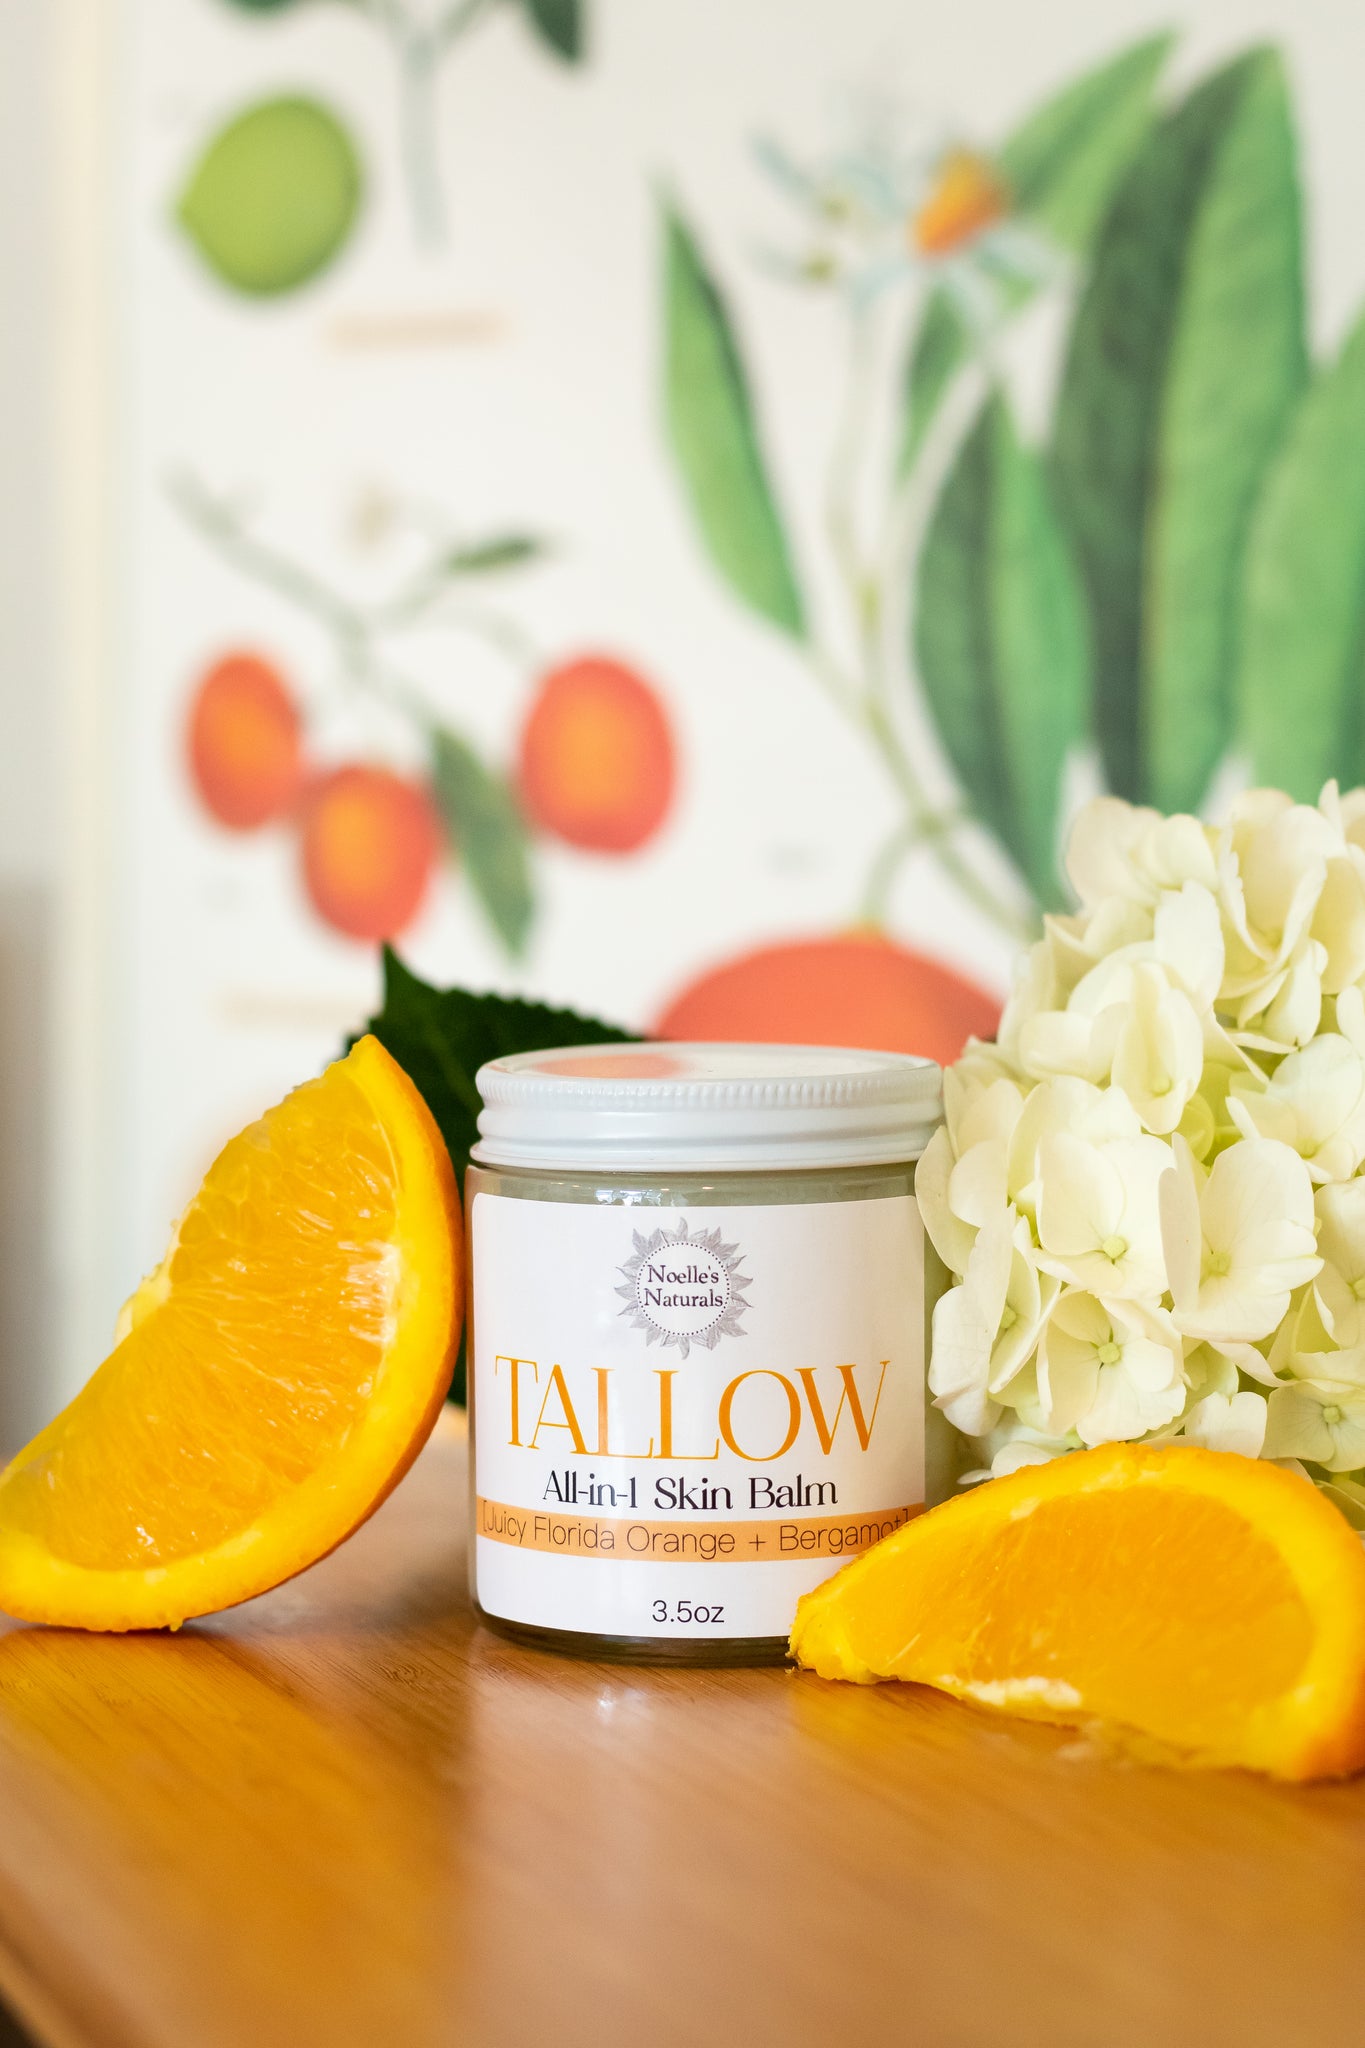 Organic Tallow Balm - Juicy Florida Orange + Bergamot - 3.5oz